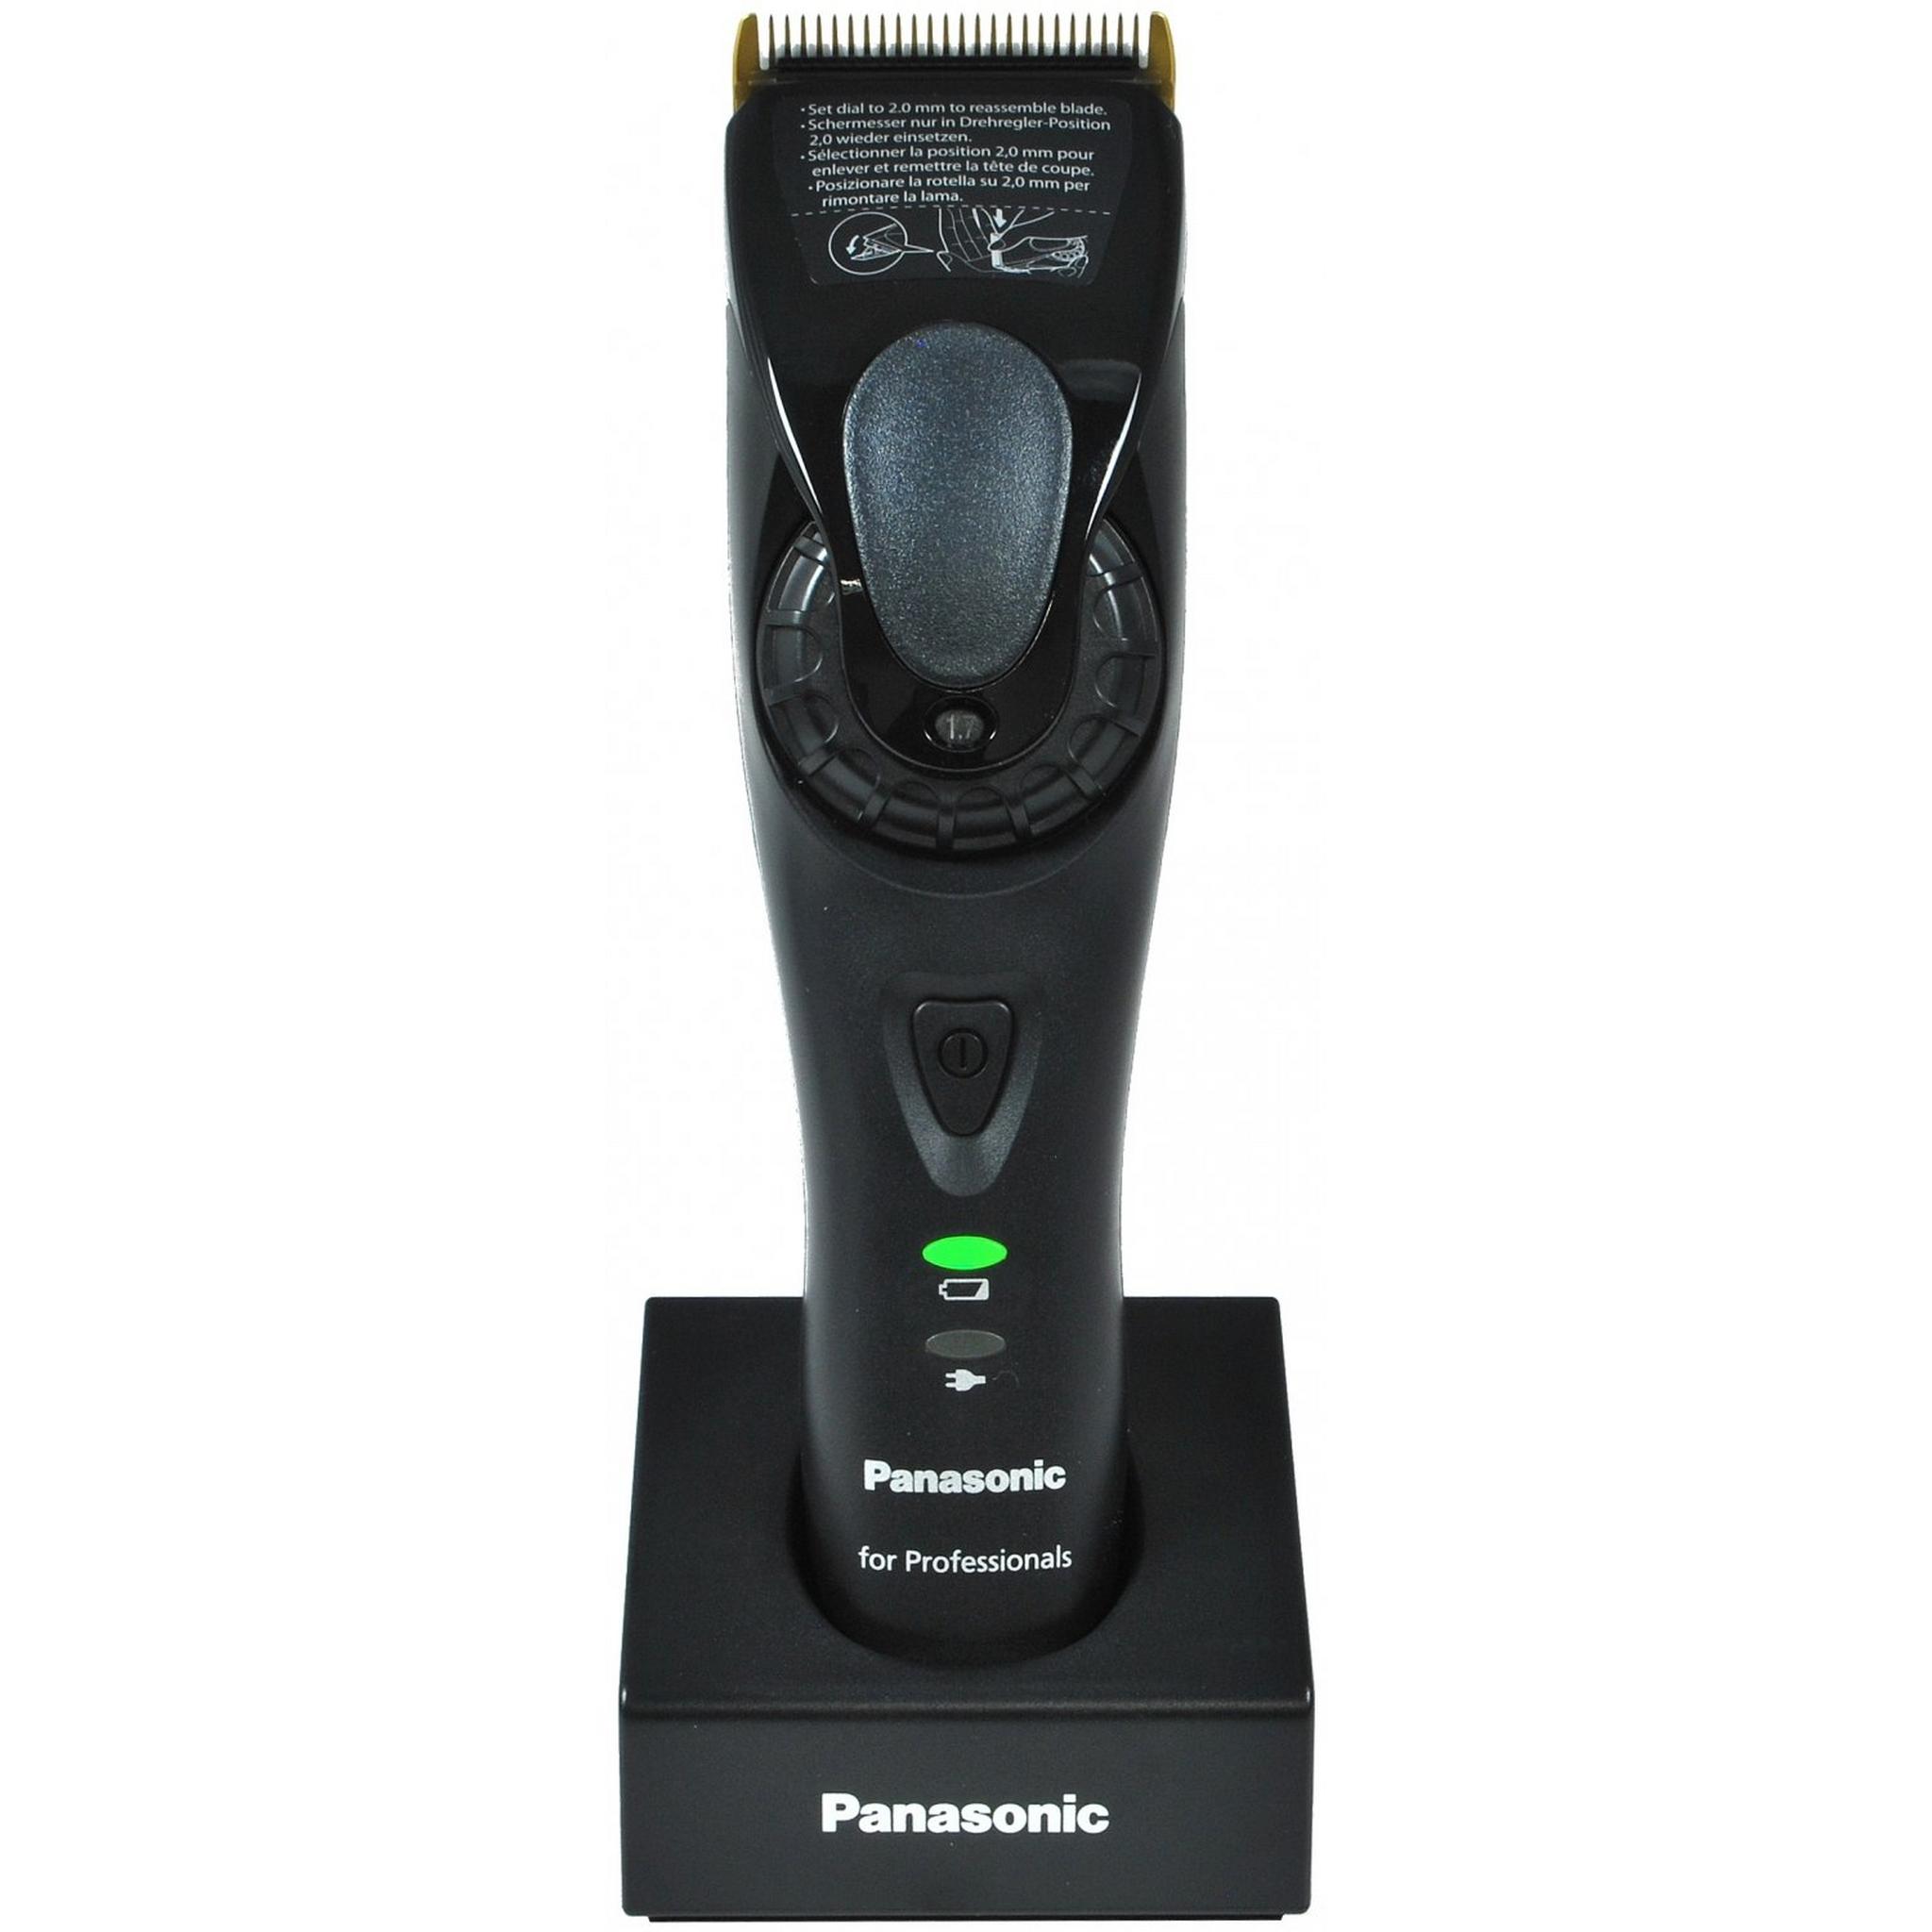 Panasonic ER-GP80-K722 Professional Hair Trimmer